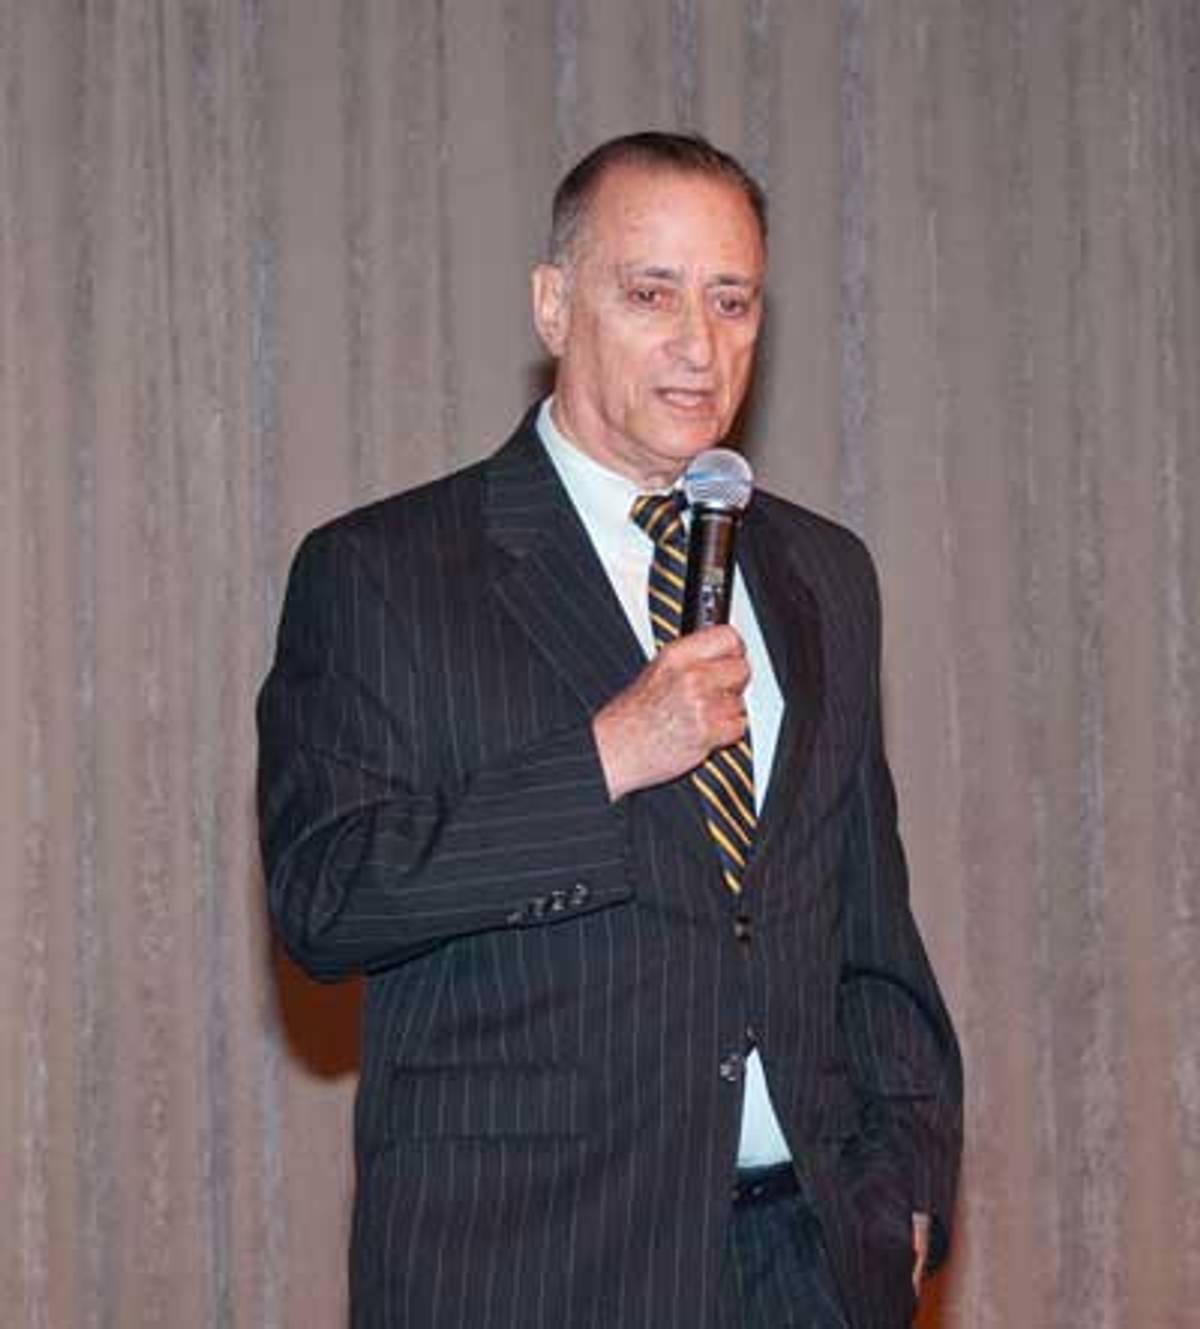 David Rothenberg at The Fortune Society’s 2011 Benefit Gala. (Photo: John Dalton via Flickr)